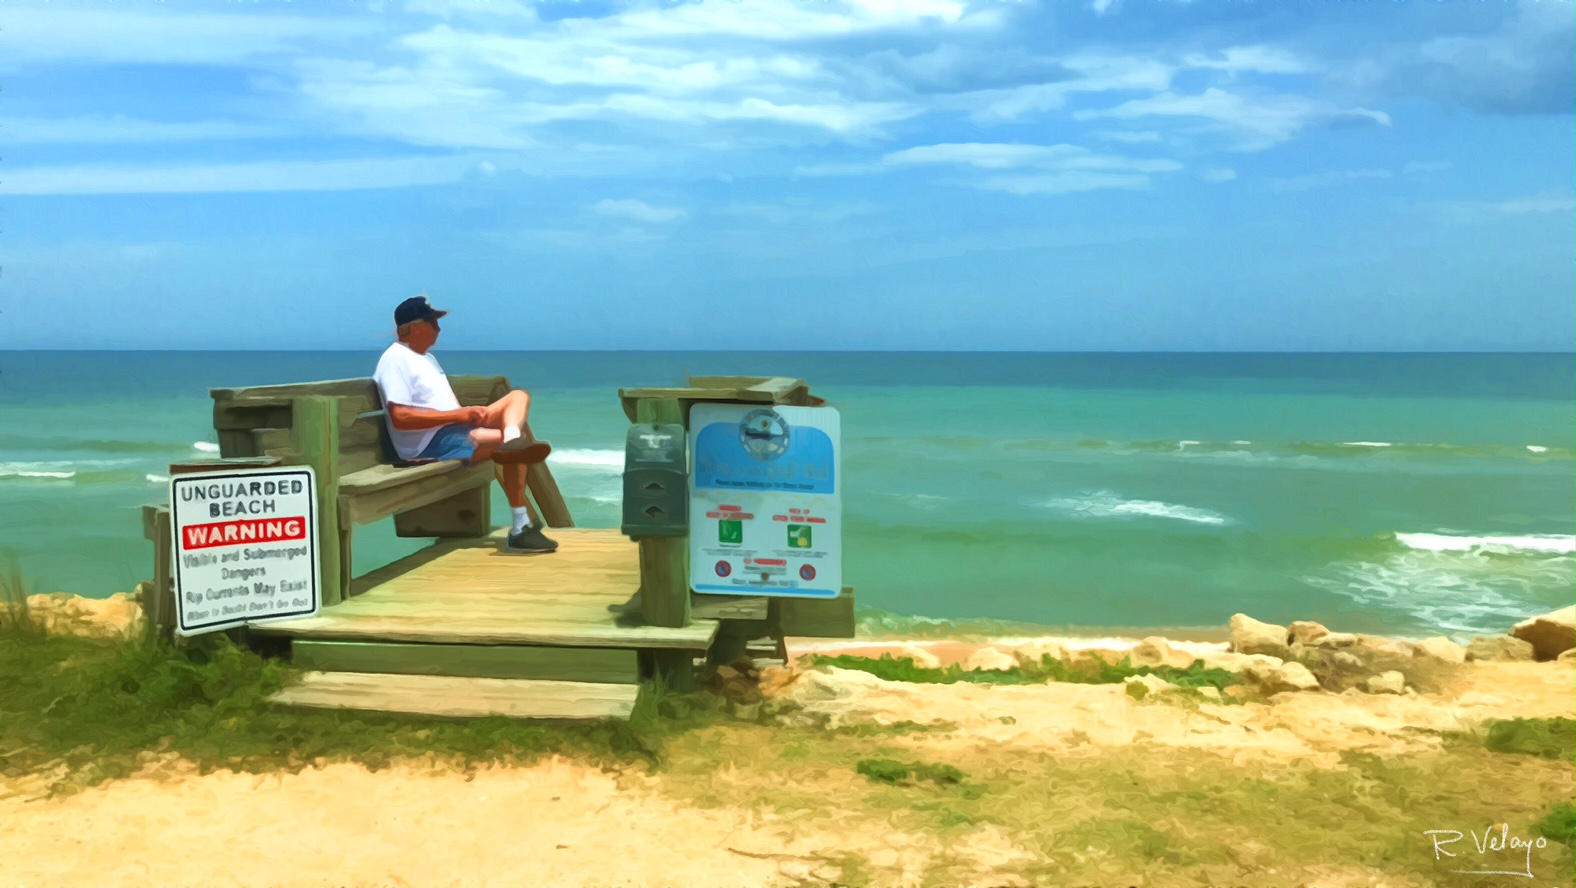 "LONE MAN ON DECK AT FLAGLER BEACH" [Created: 6/25/2021]